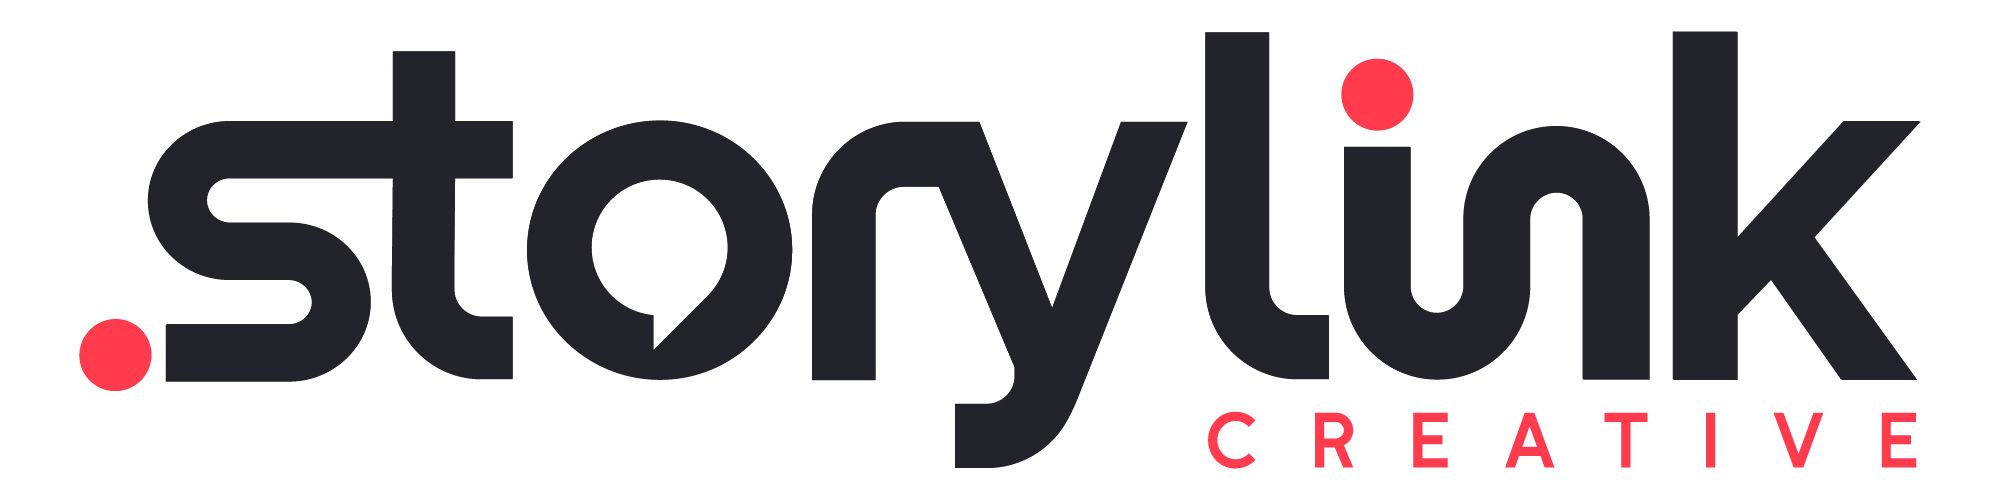 storylinkcreative Logo